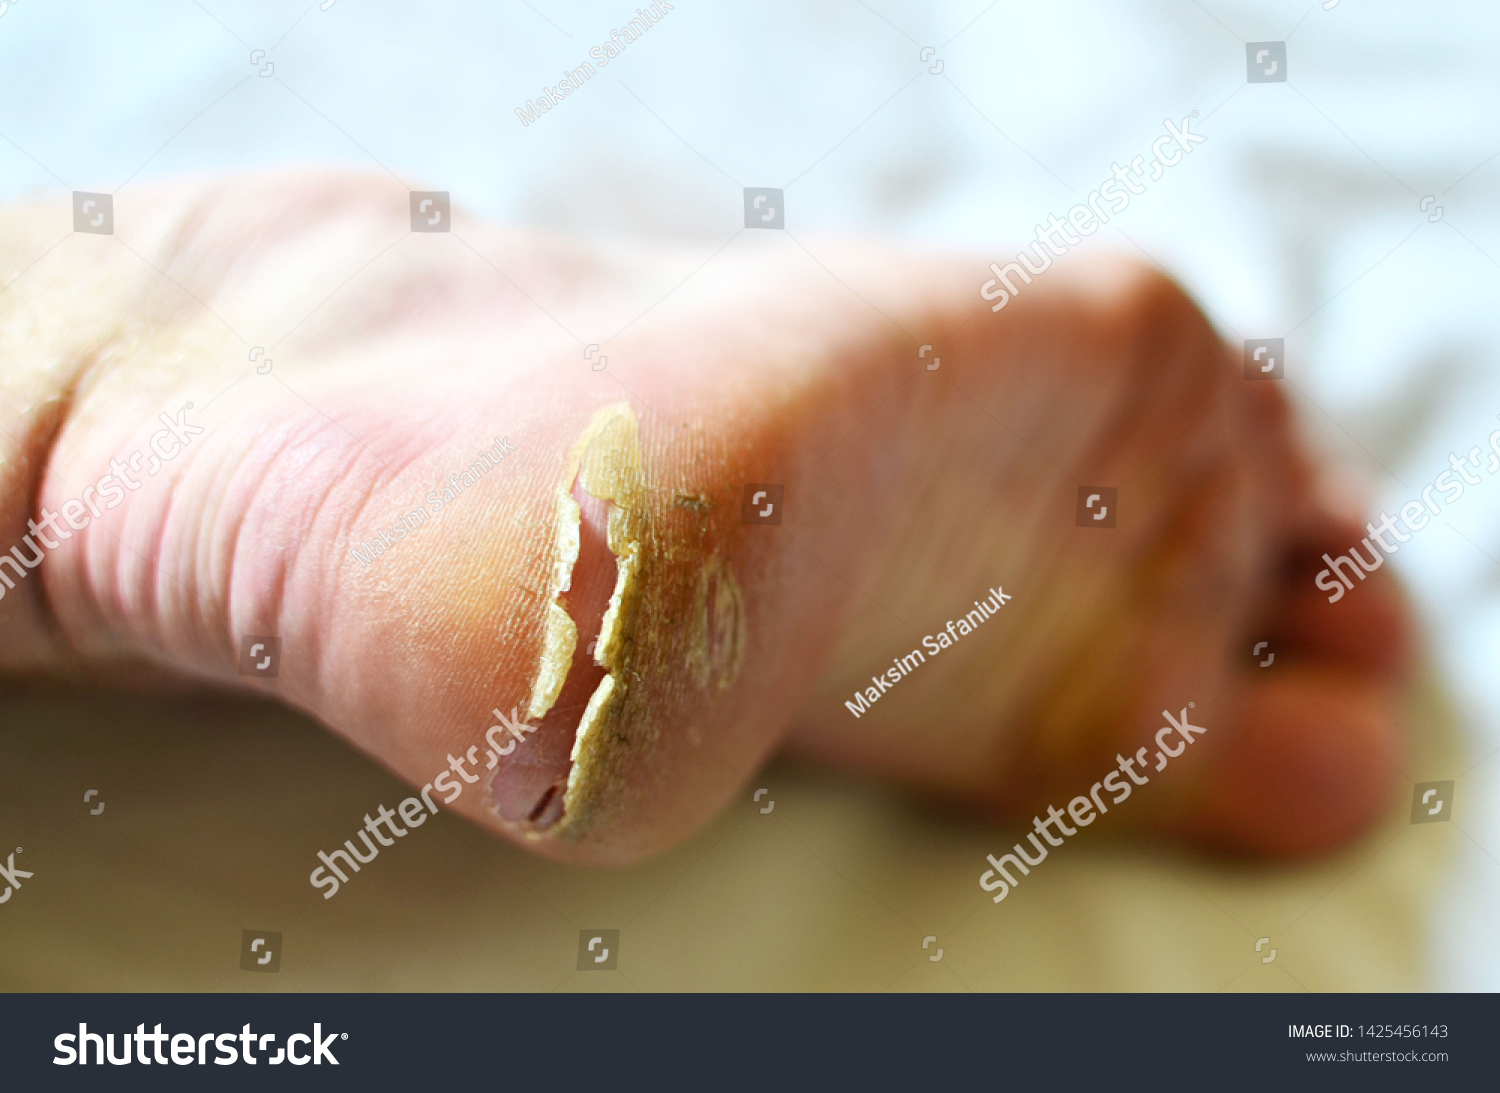 cracking calluses on feet